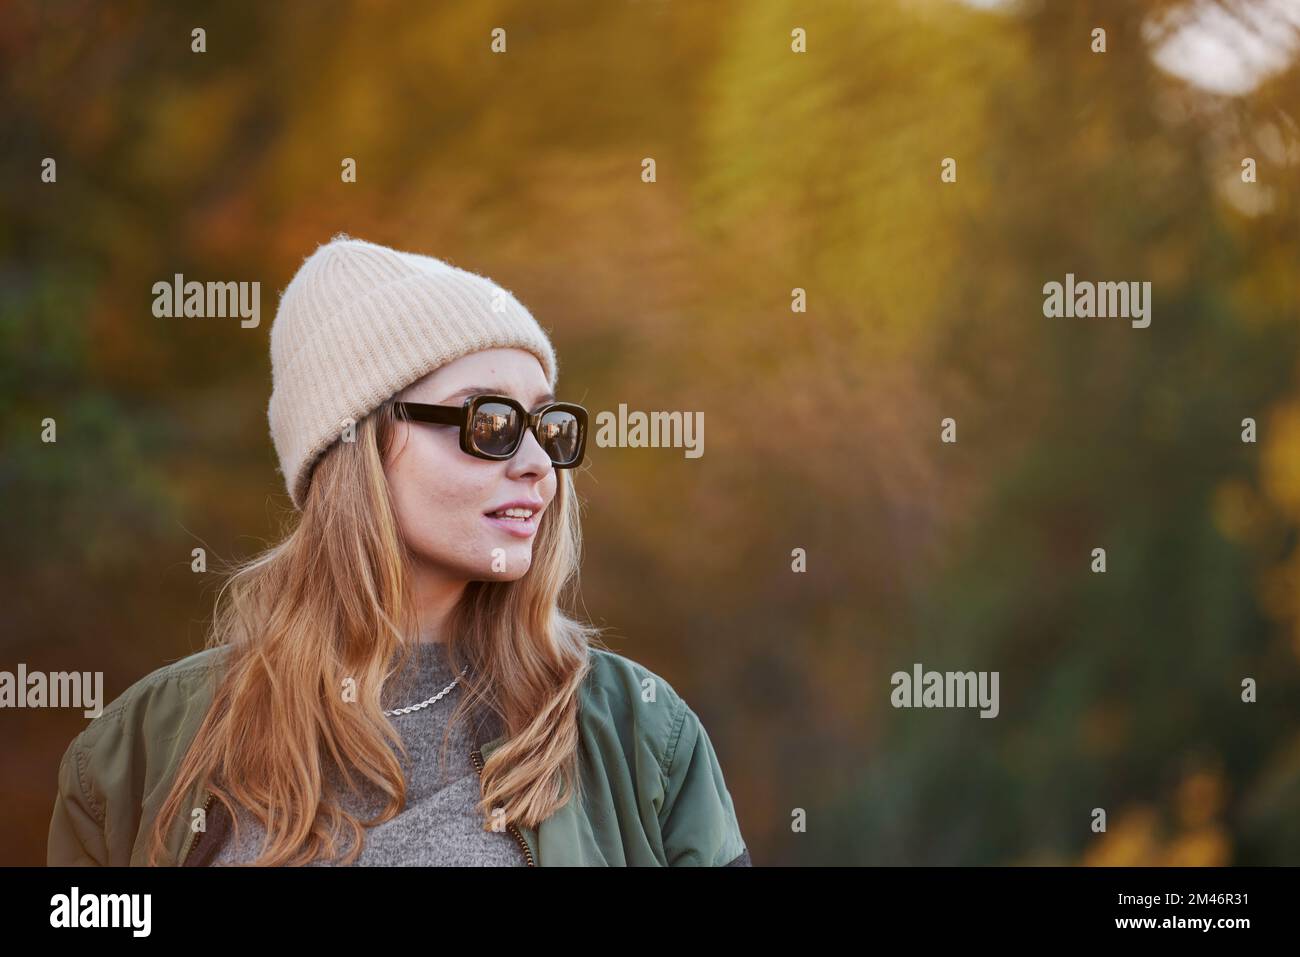 Woman wearing sunglasses looking away Stock Photo